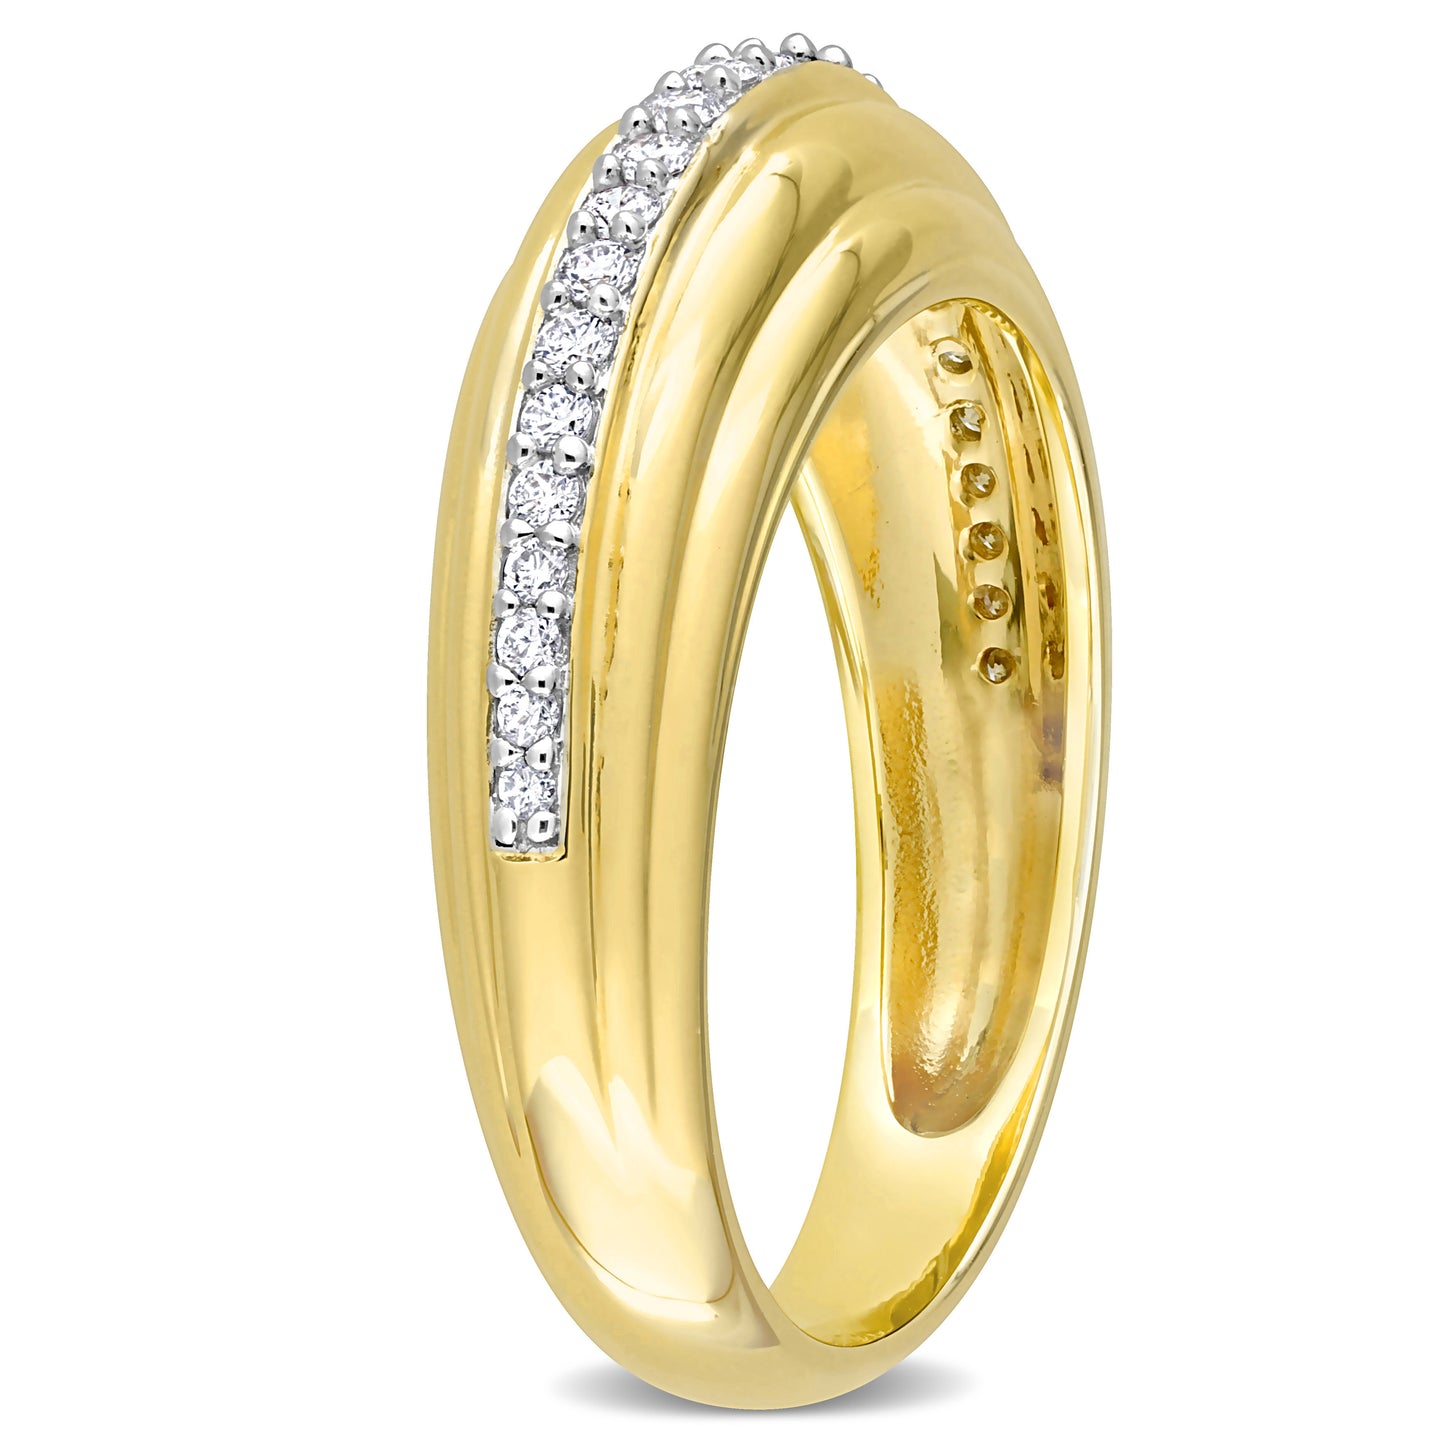 Graduated Diamond Ring in 14k Yellow Gold